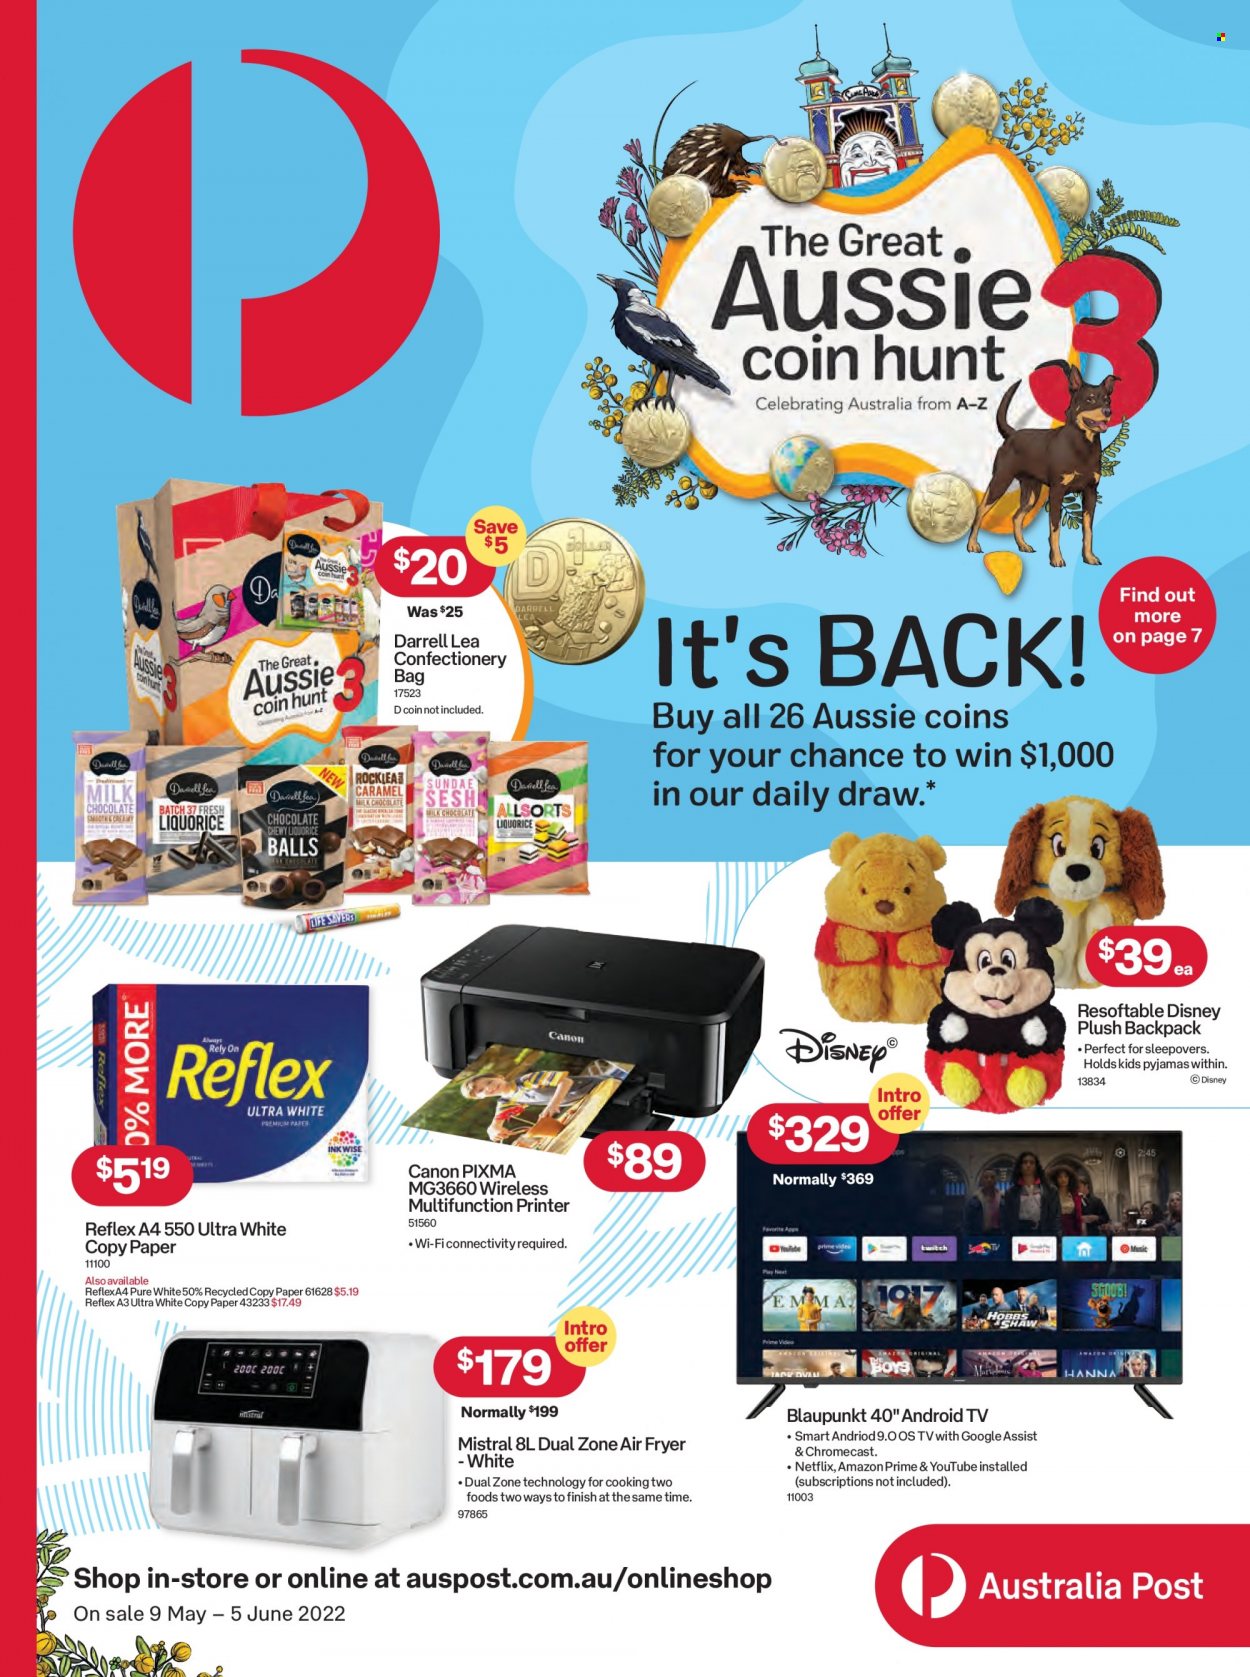 thumbnail - Australia Post Catalogue - 9 May 2022 - 5 Jun 2022 - Sales products - Aussie, Disney, bag, Canon, Android TV, TV, Google Chromecast, air fryer, printer. Page 1.